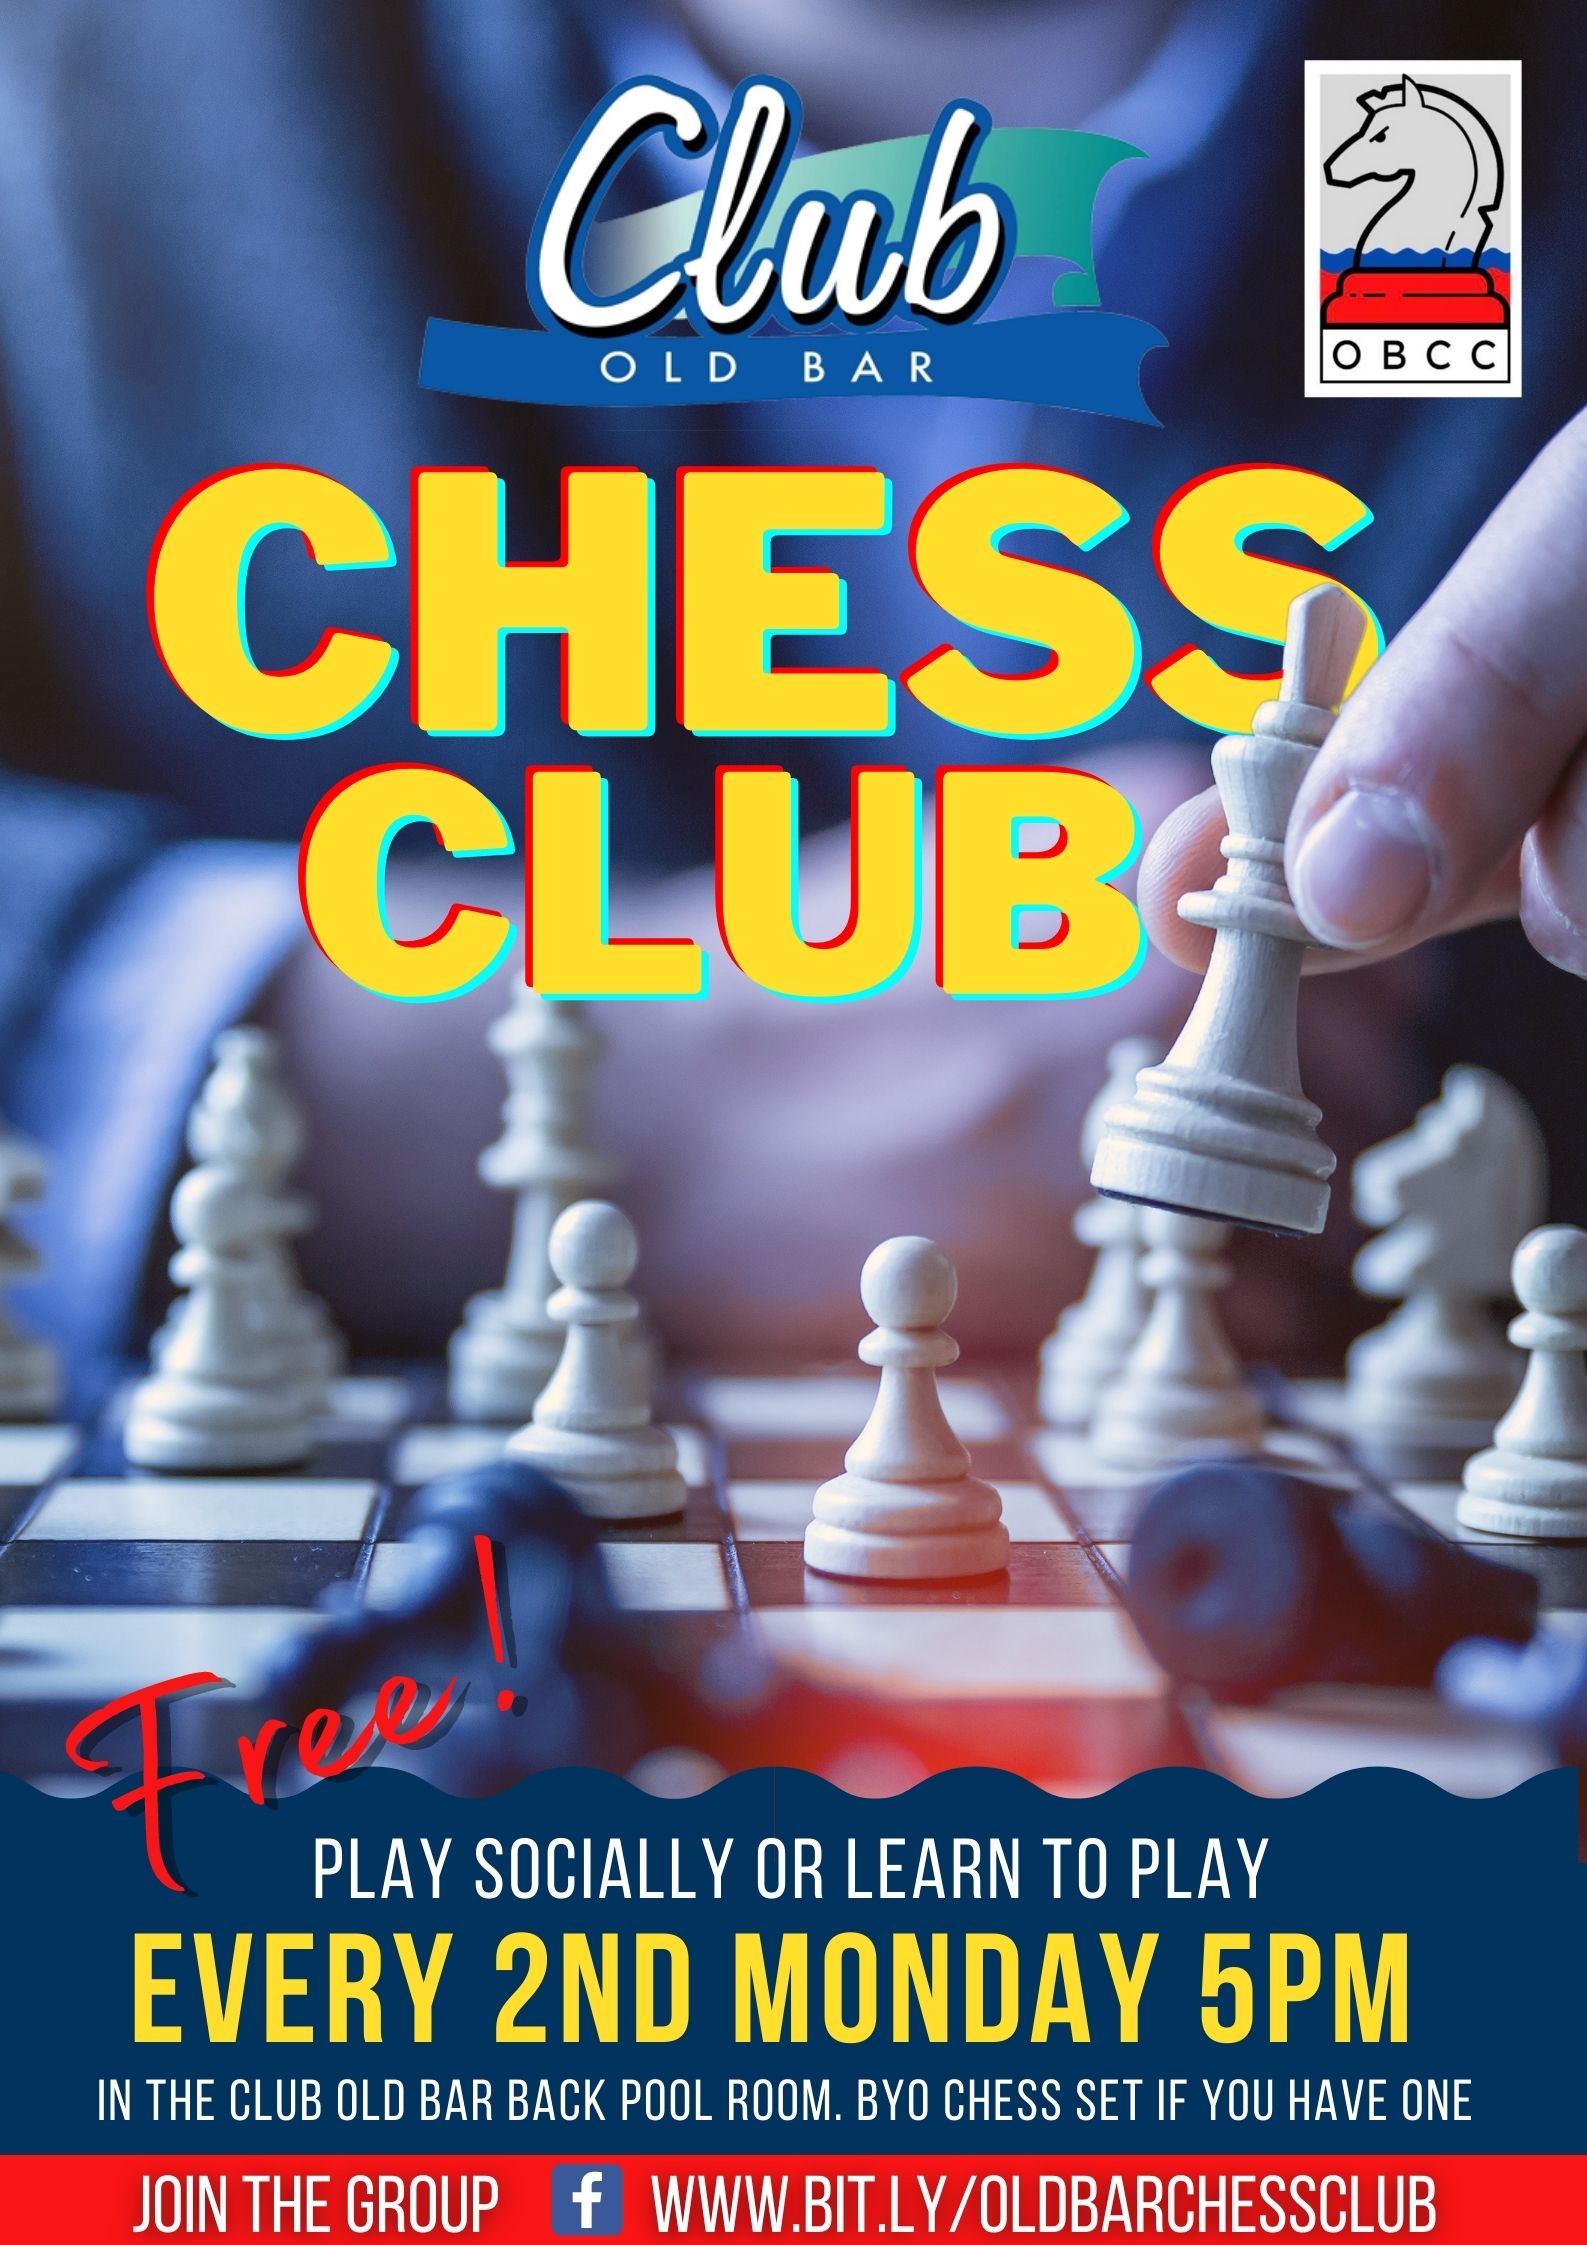 quote – Dandenong Chess Club